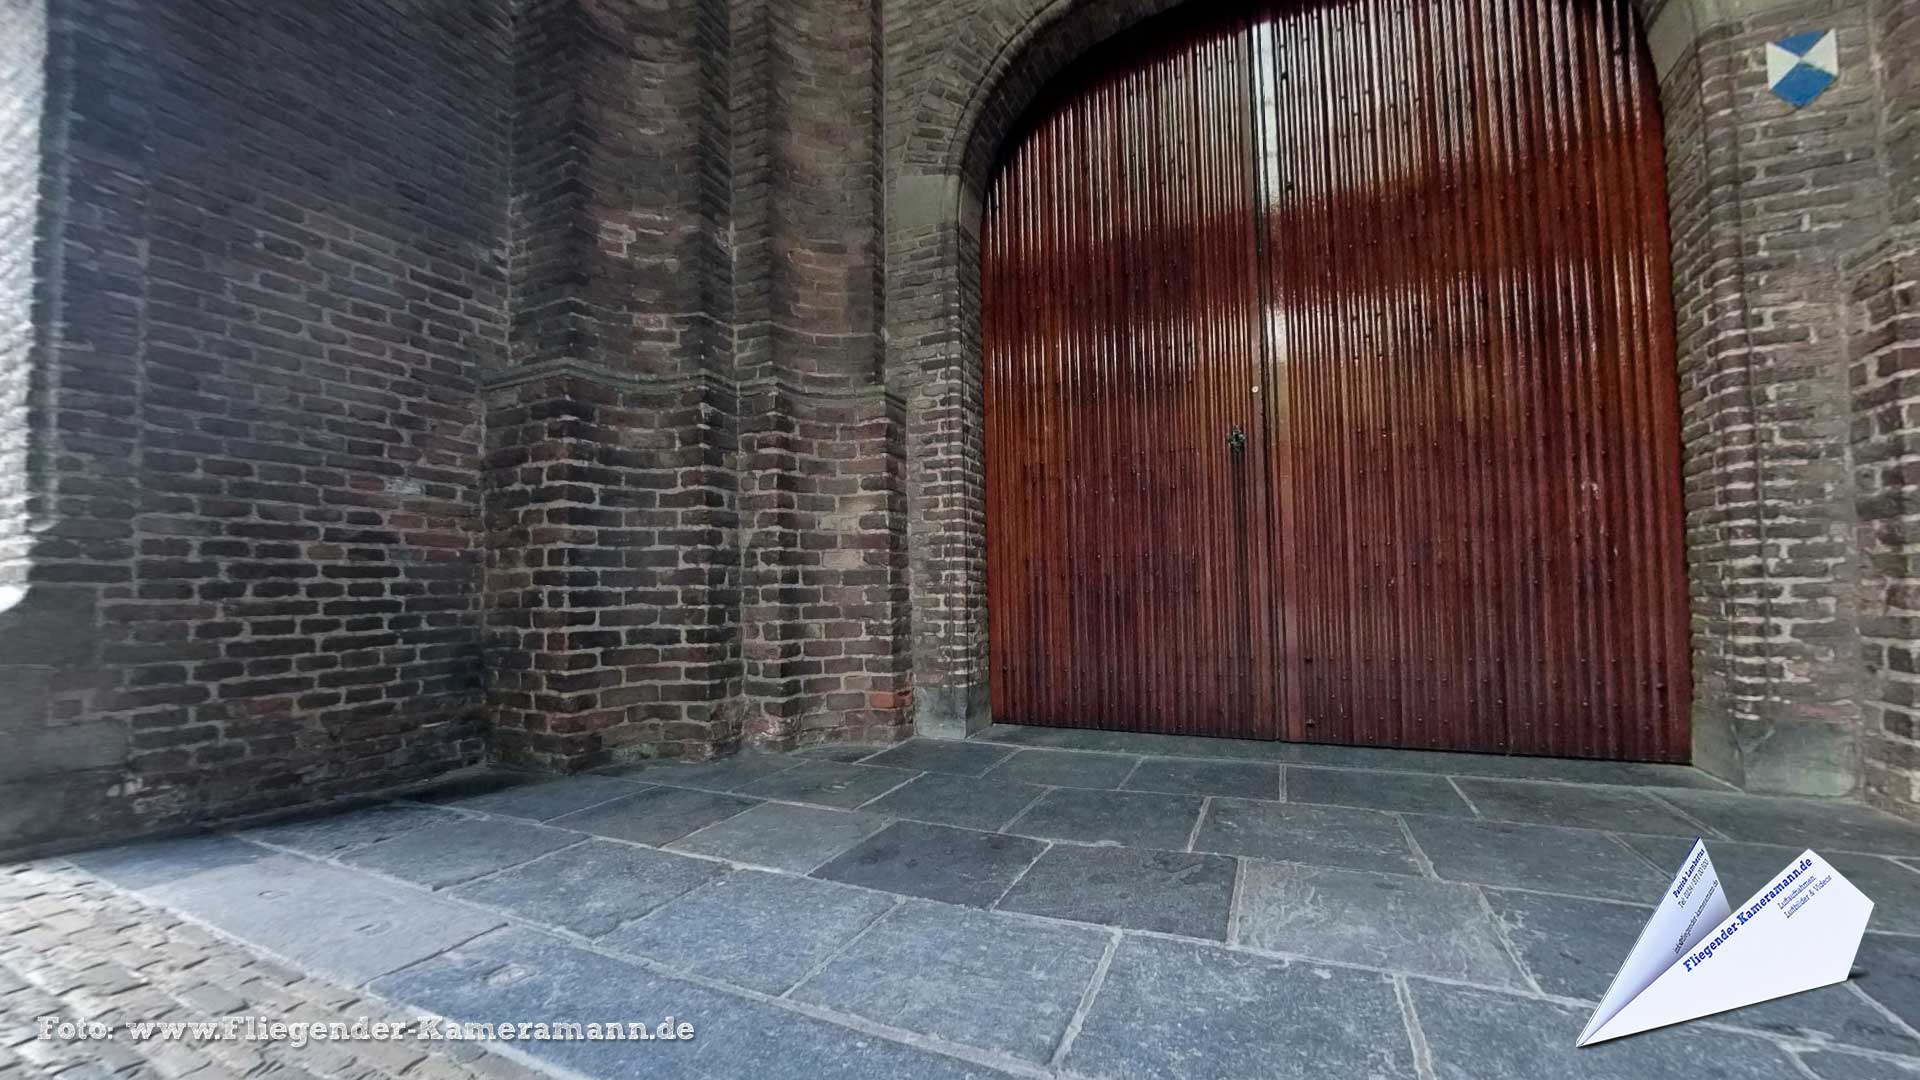 Ingang "de Oude kerk" in Delft (NL) - 360°-Panorama